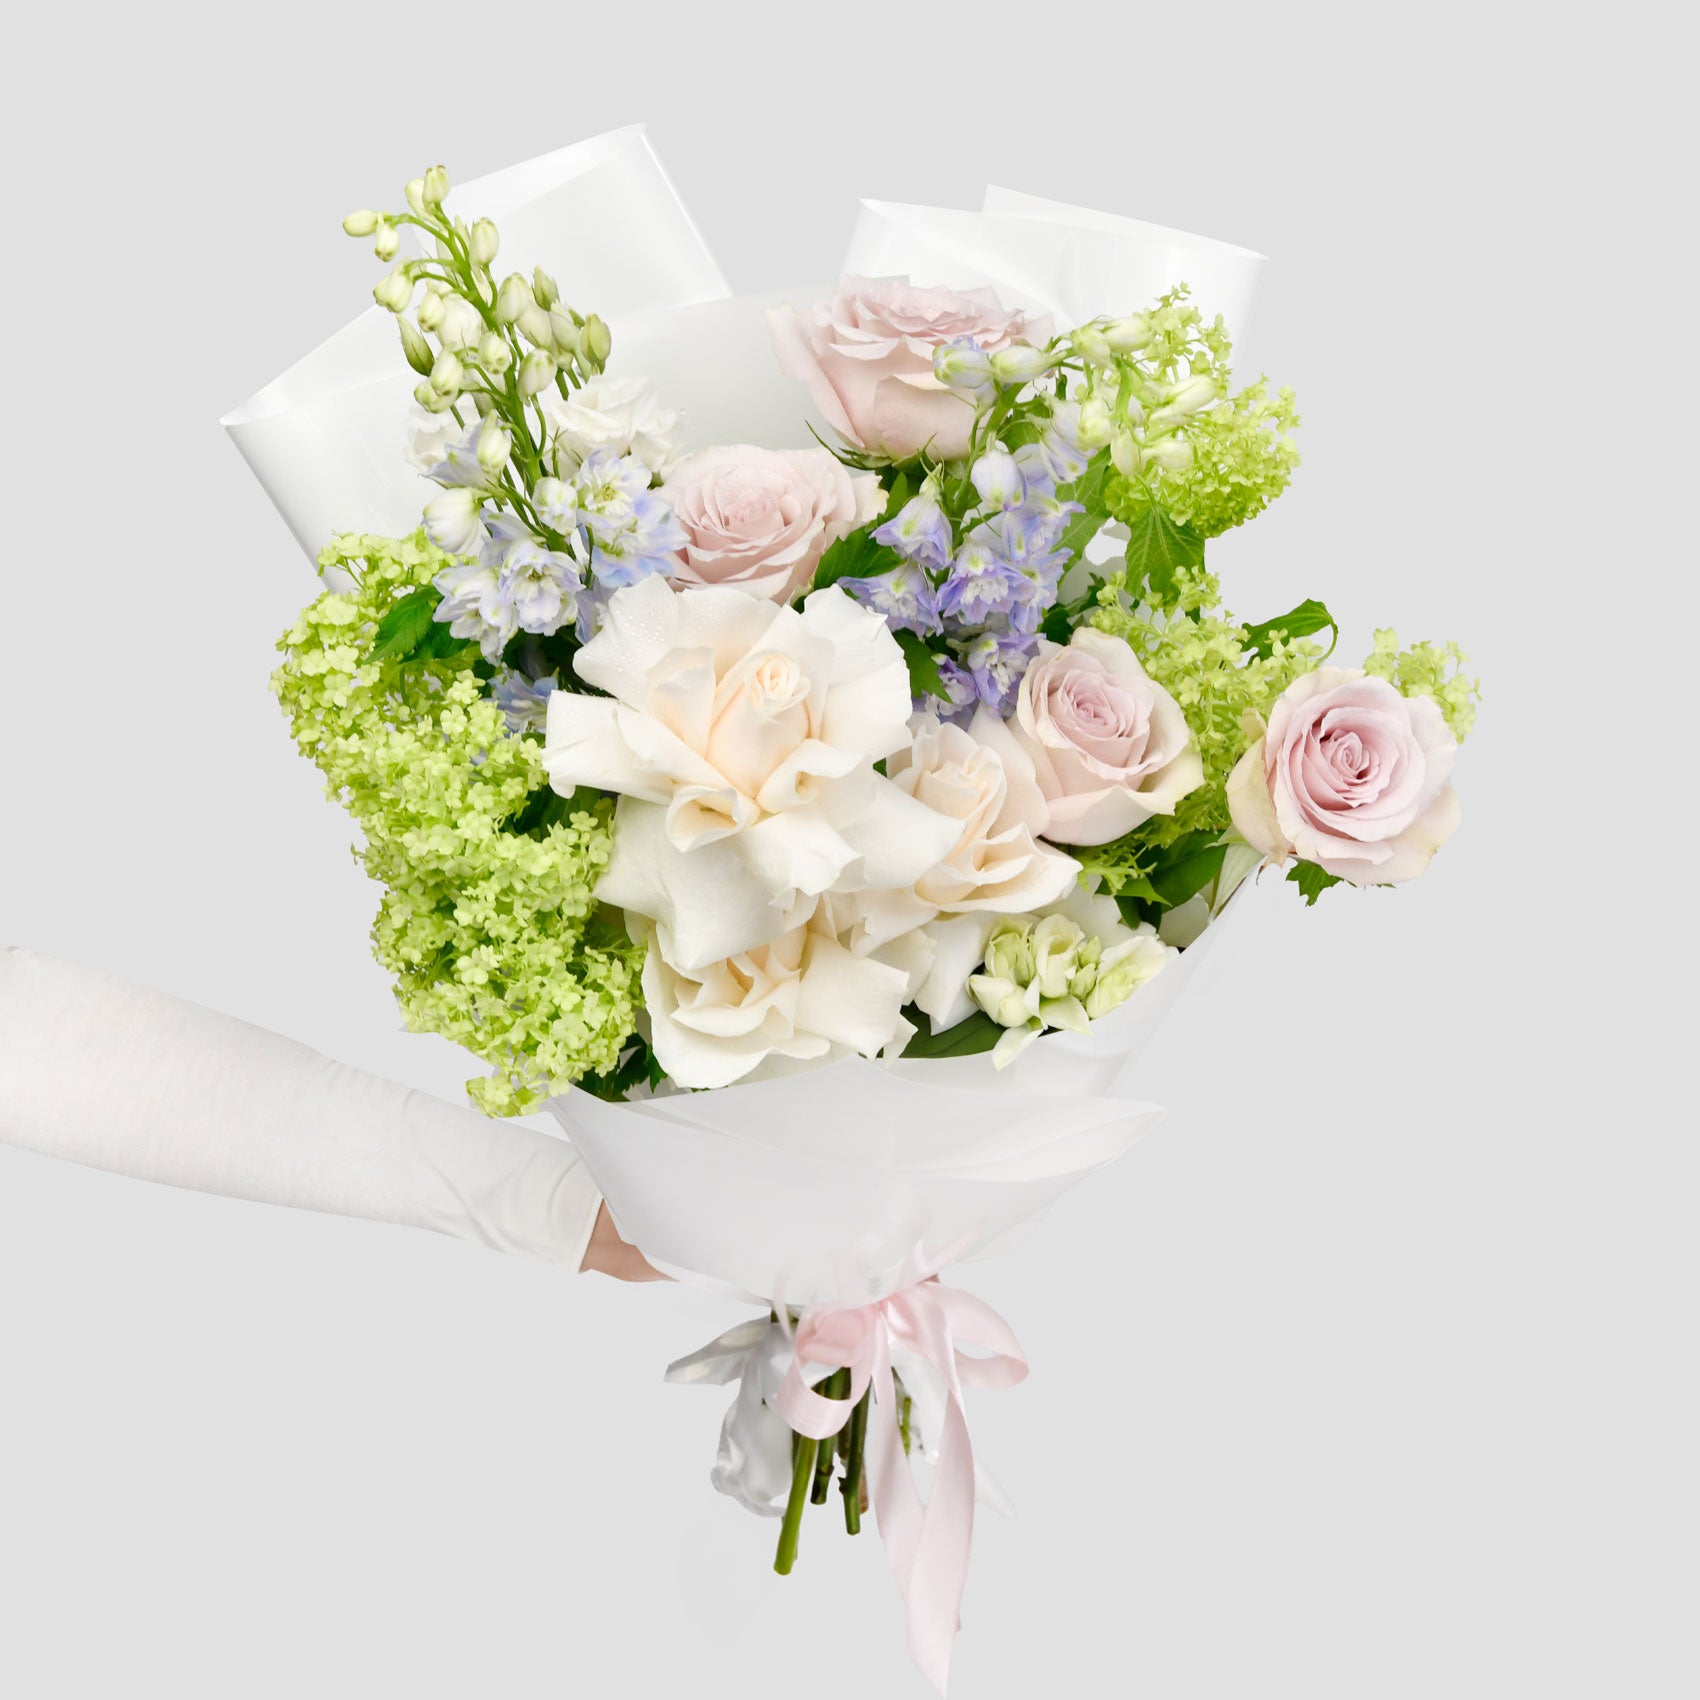 Buchet trandafiri speciali albi, delphinium si viburnum